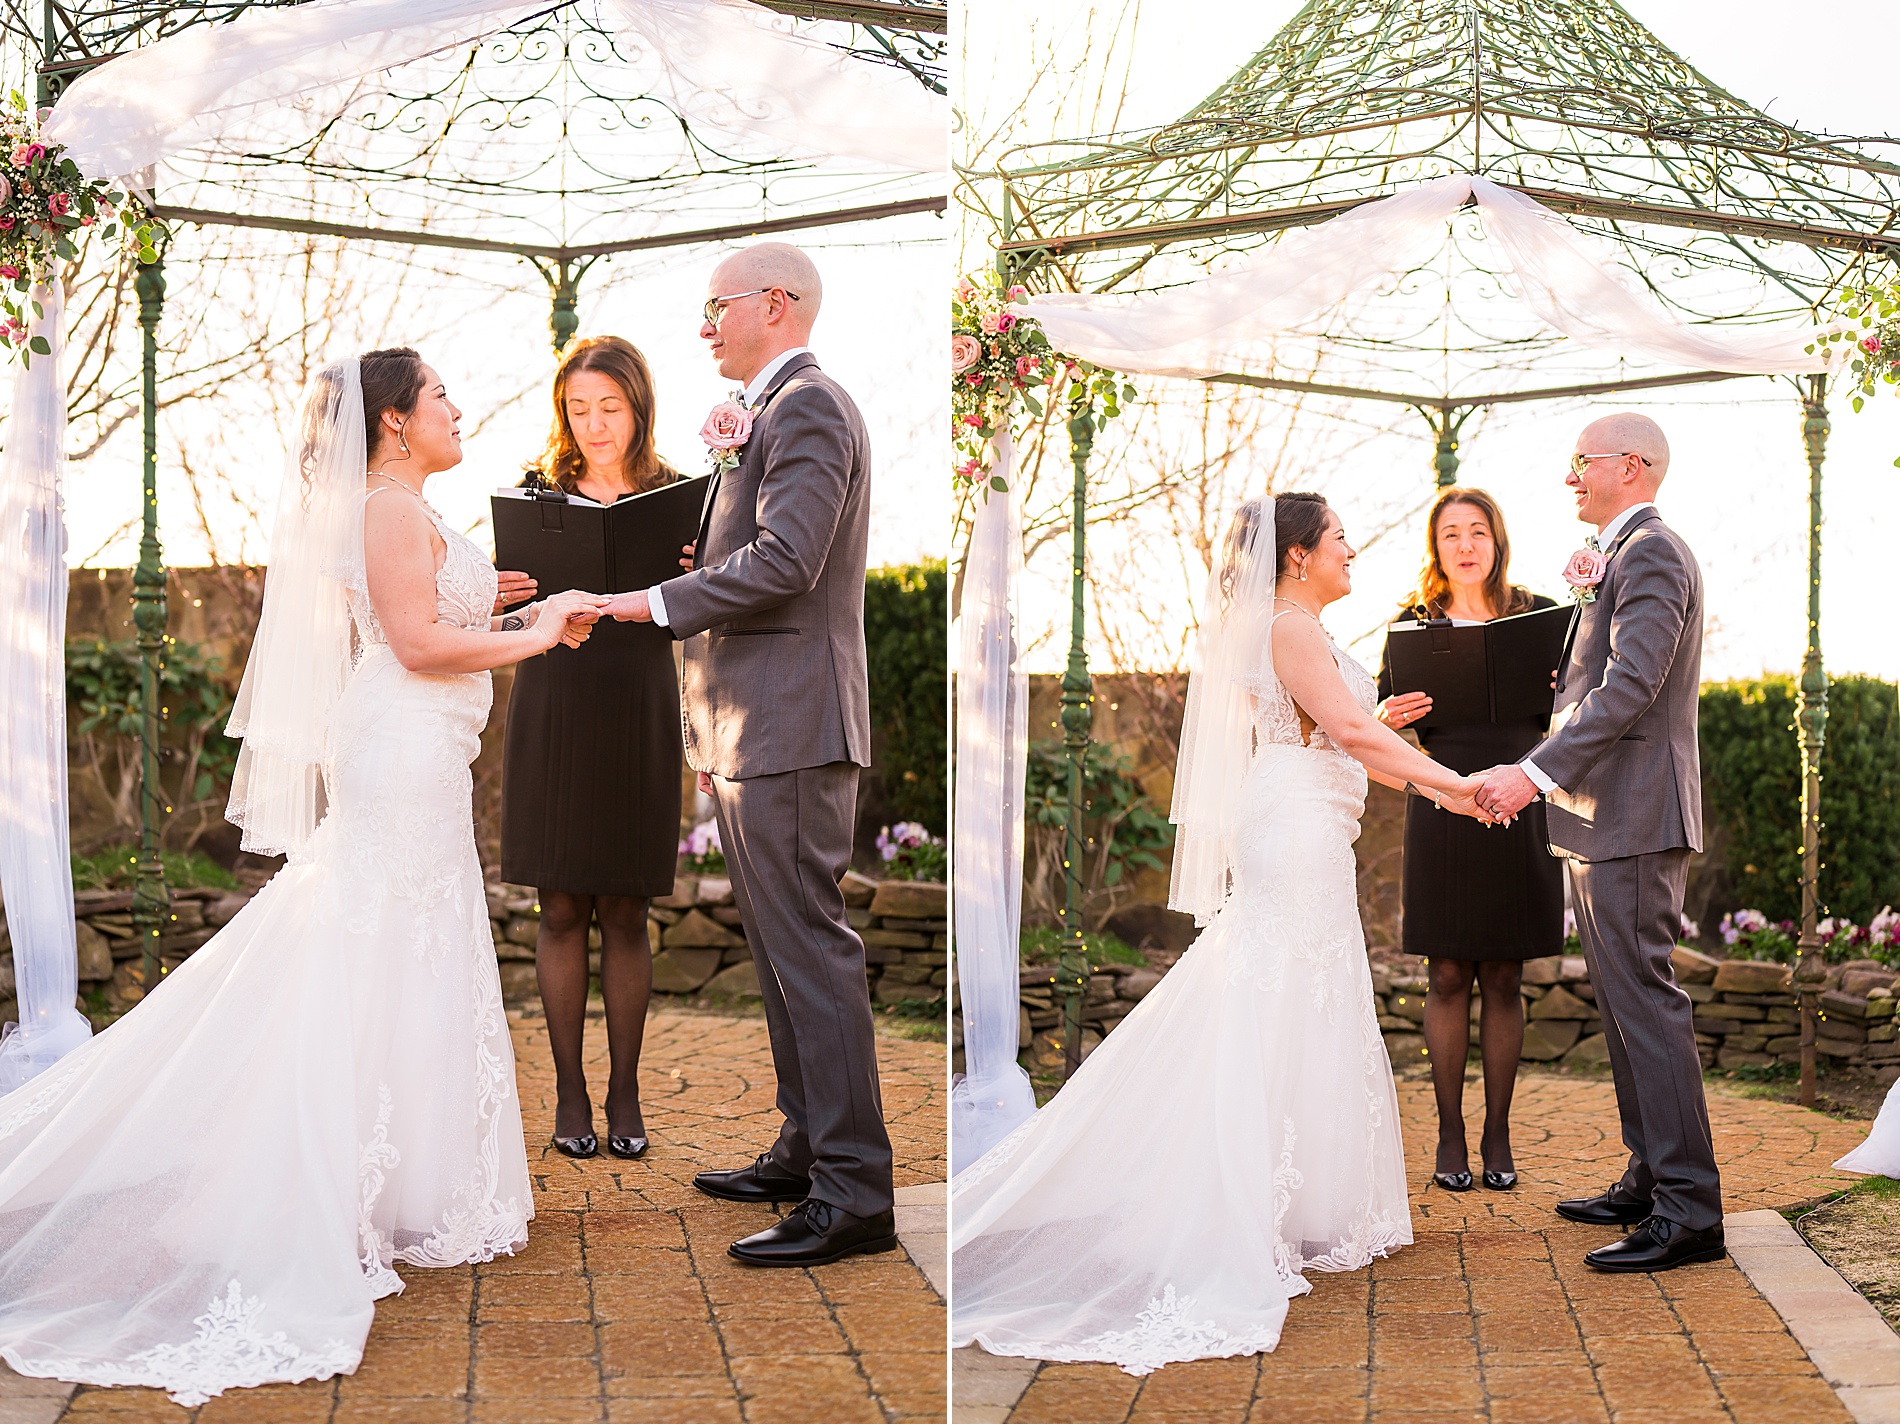 couple exchange wedding vows at outdoor ceremony